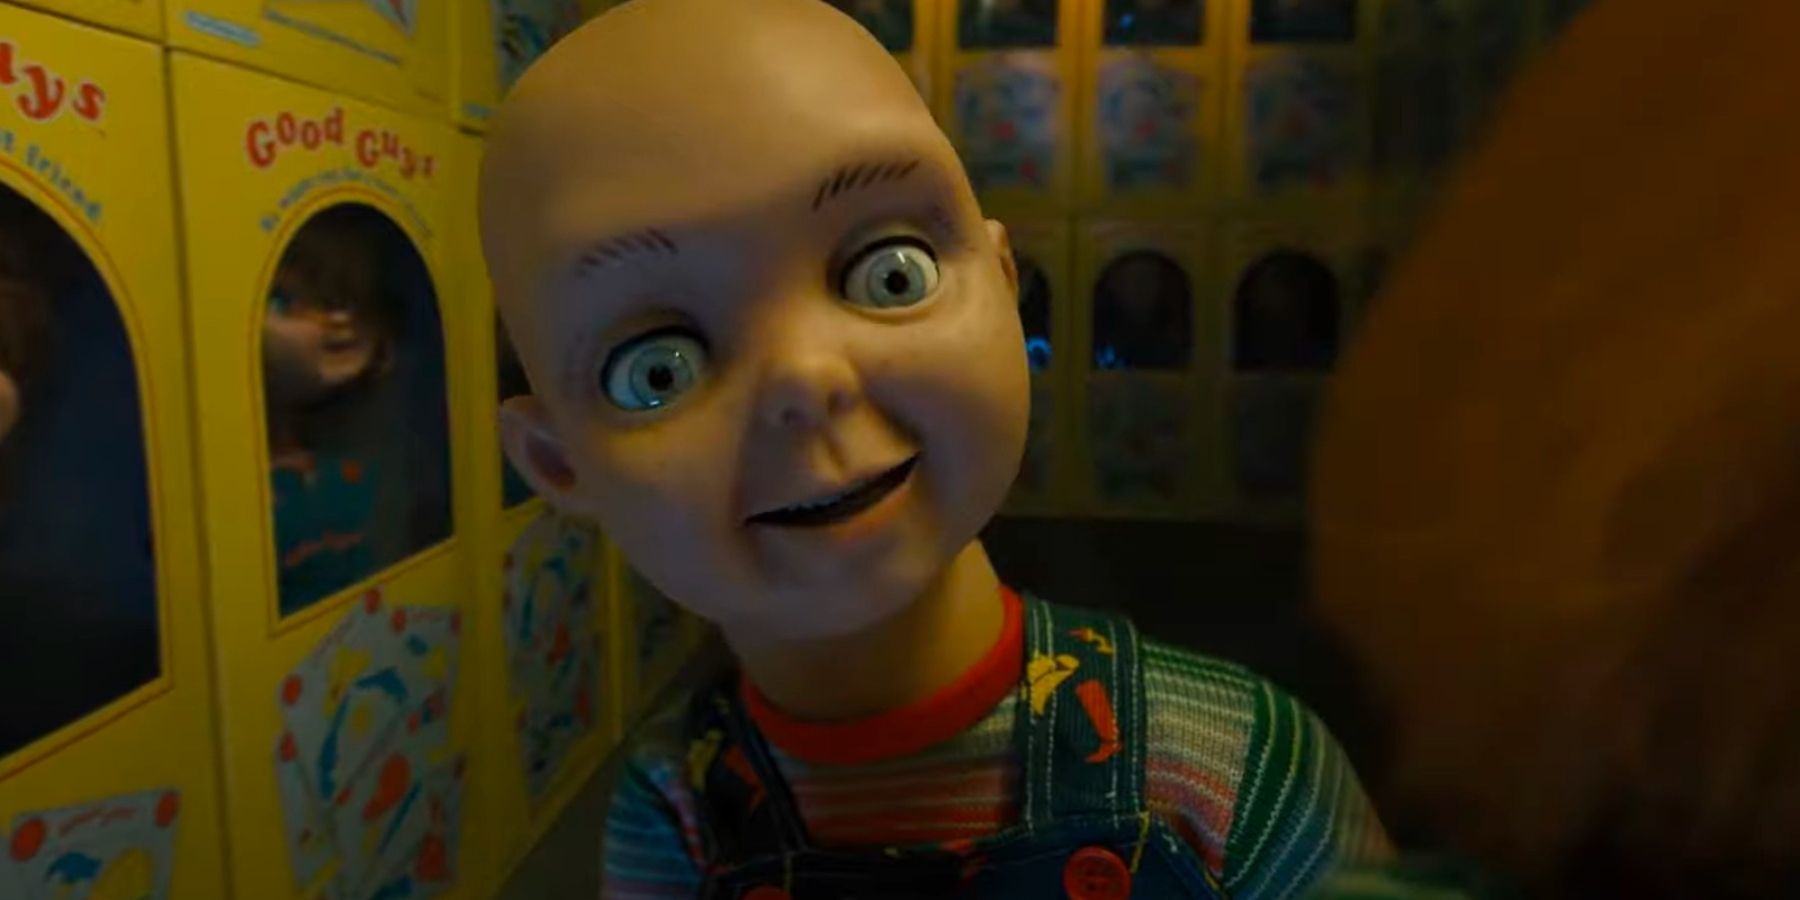 A bad Chucky doll in season 2 of Chucky